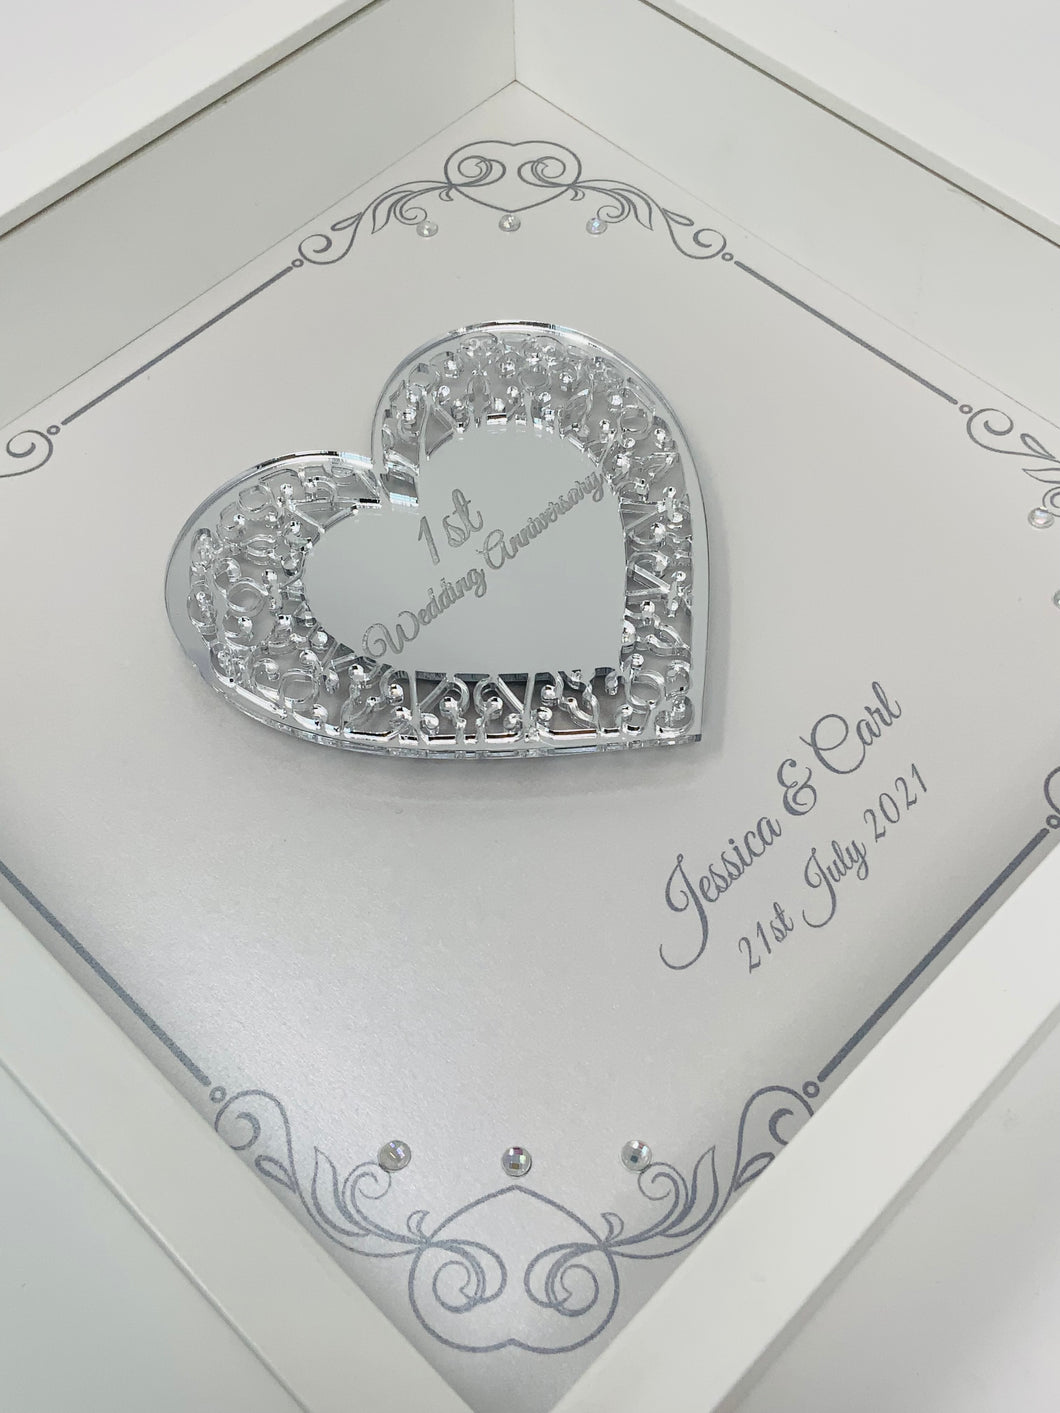 1st 1 Year Paper Wedding Anniversary Frame - Intricate Mirror Heart